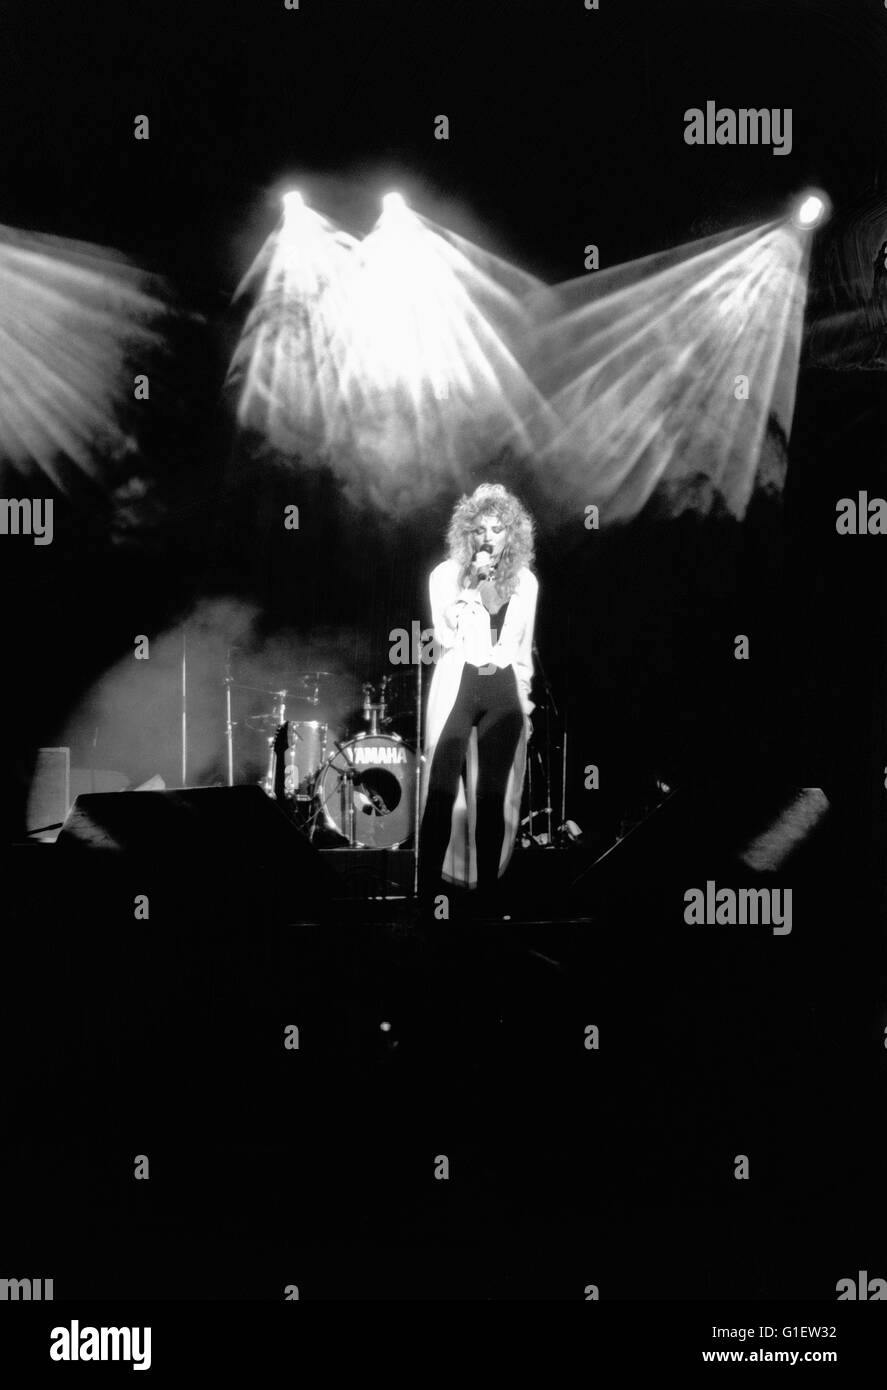 Die walisische Popsängerin Rock- und bei einem Konzert Bonnie Tyler, 1990er Jahre. La chanteuse pop rock gallois et Bonnie Tyler en concert, années 90. Banque D'Images